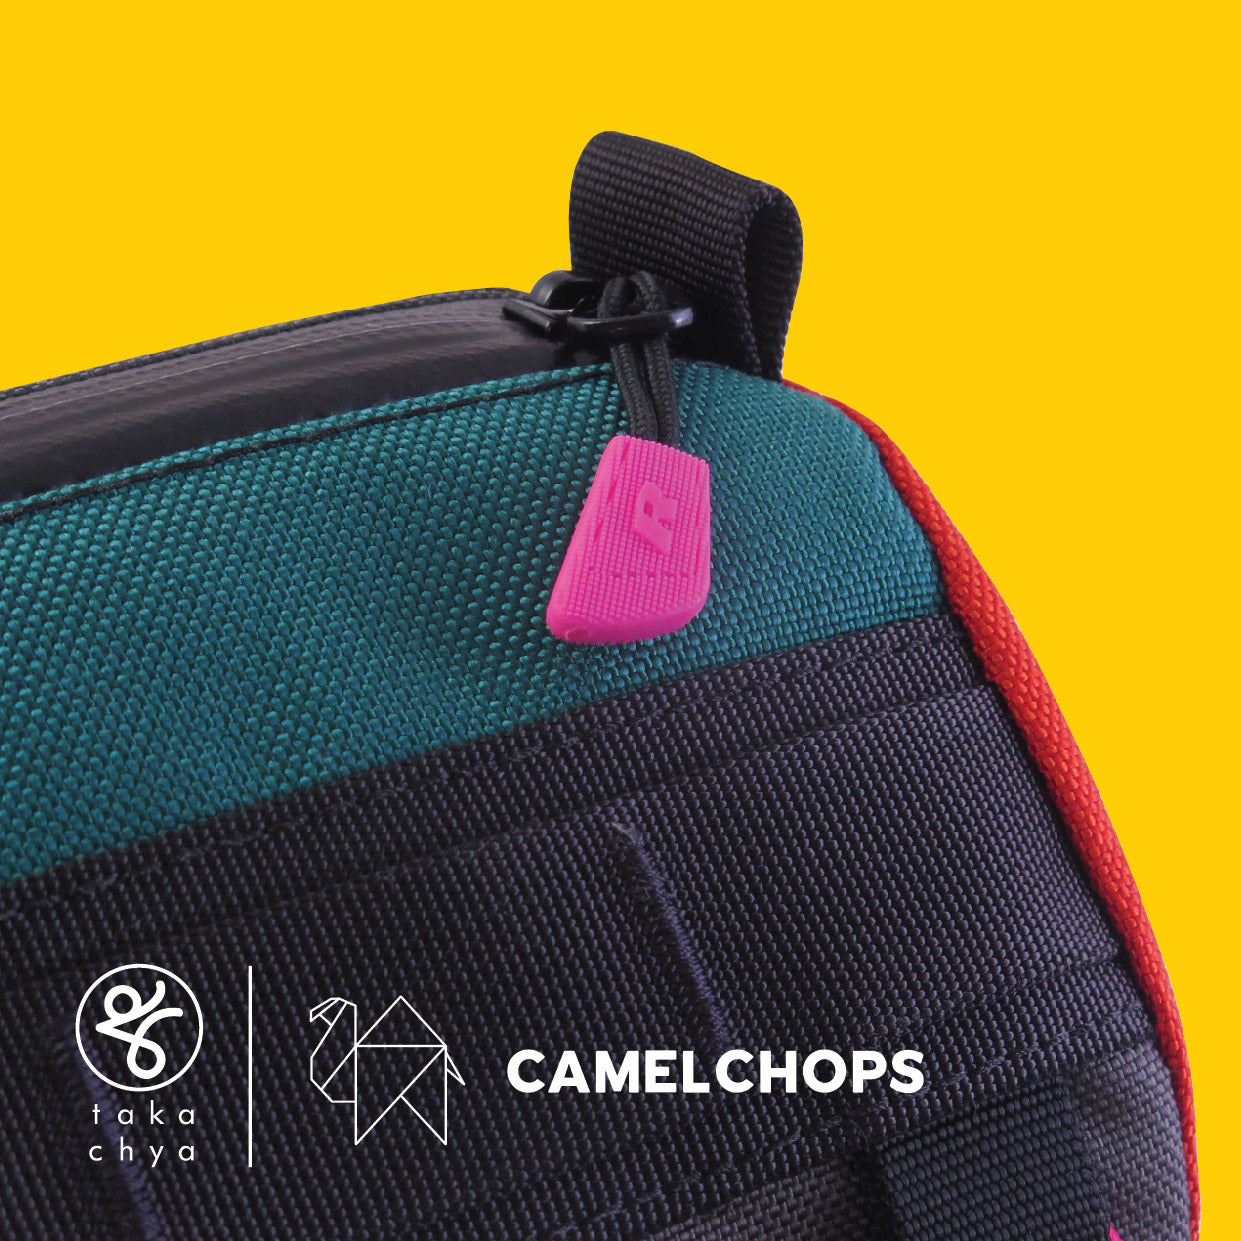 CamelChops Blimp 2.0 Handlebar Bag GGOO